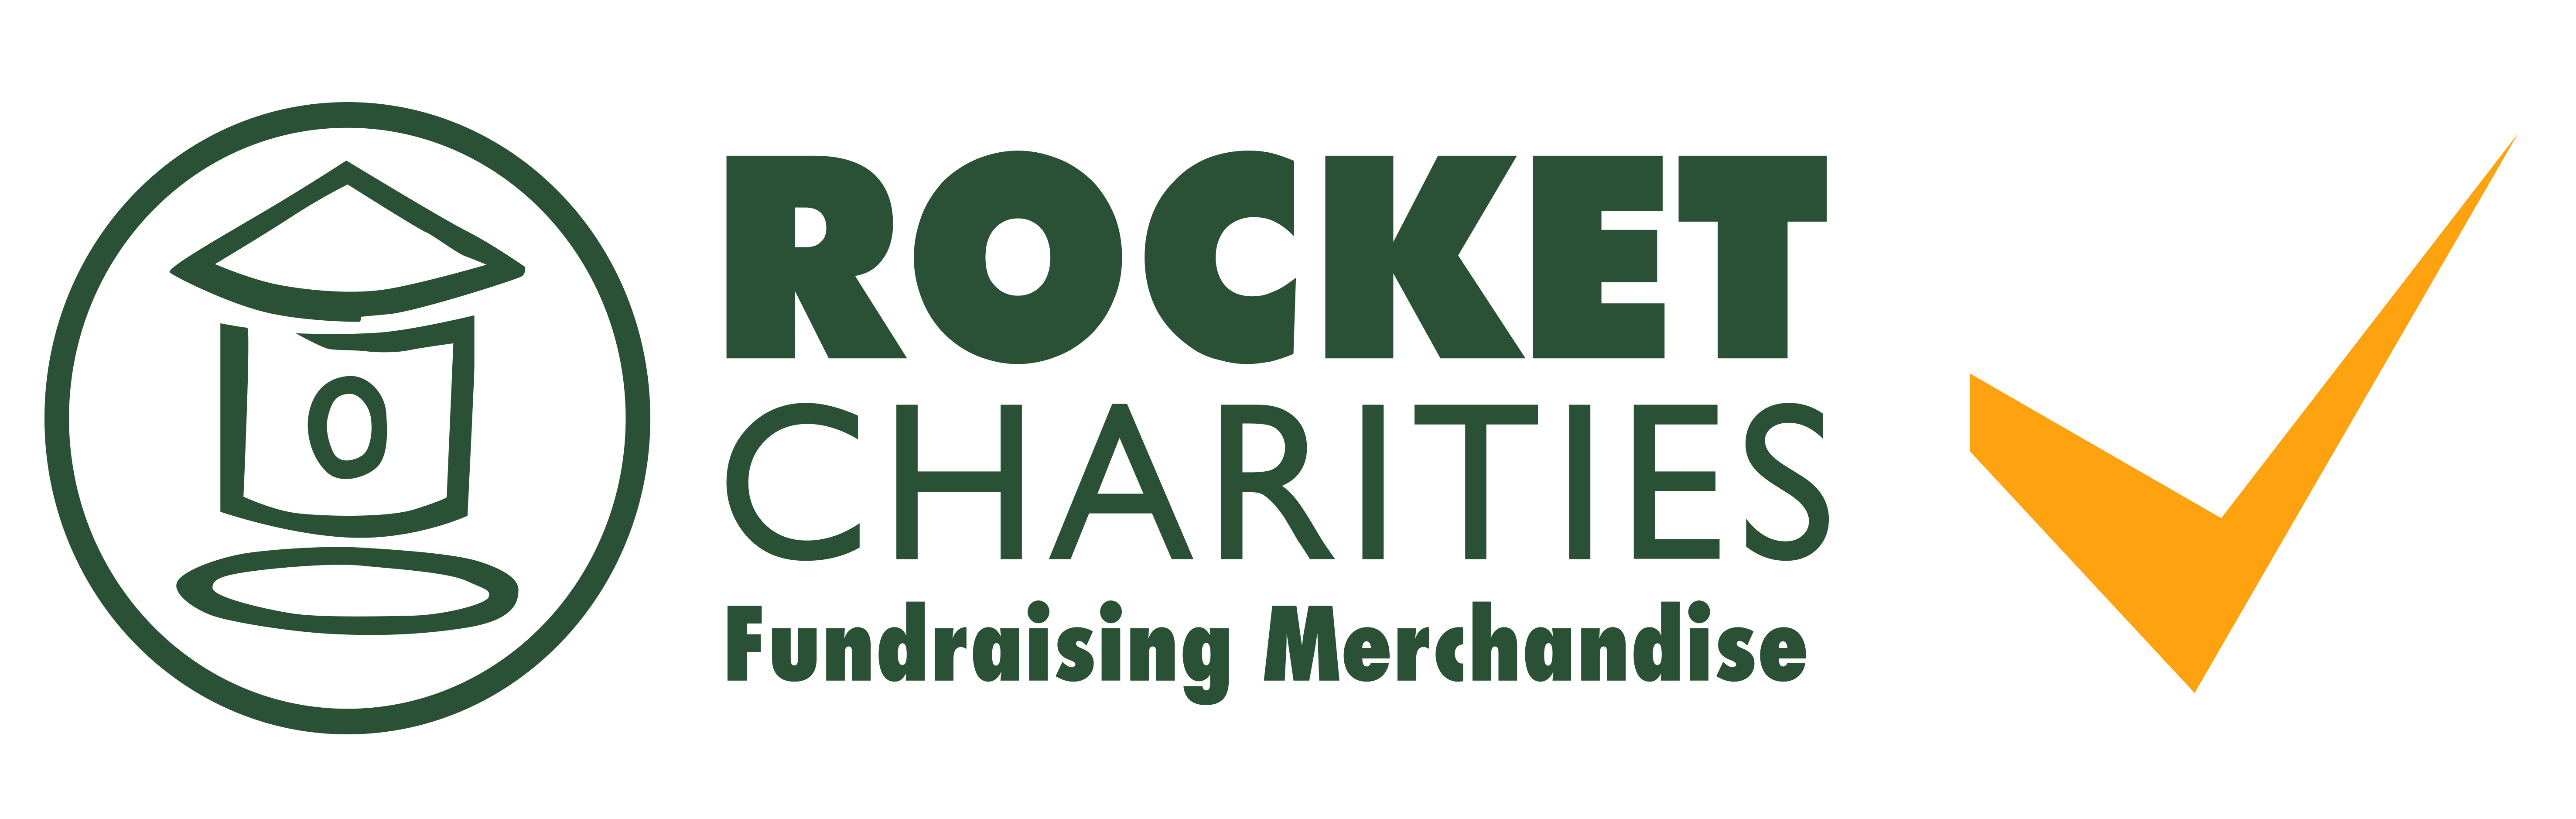 logo for Rocket Charities